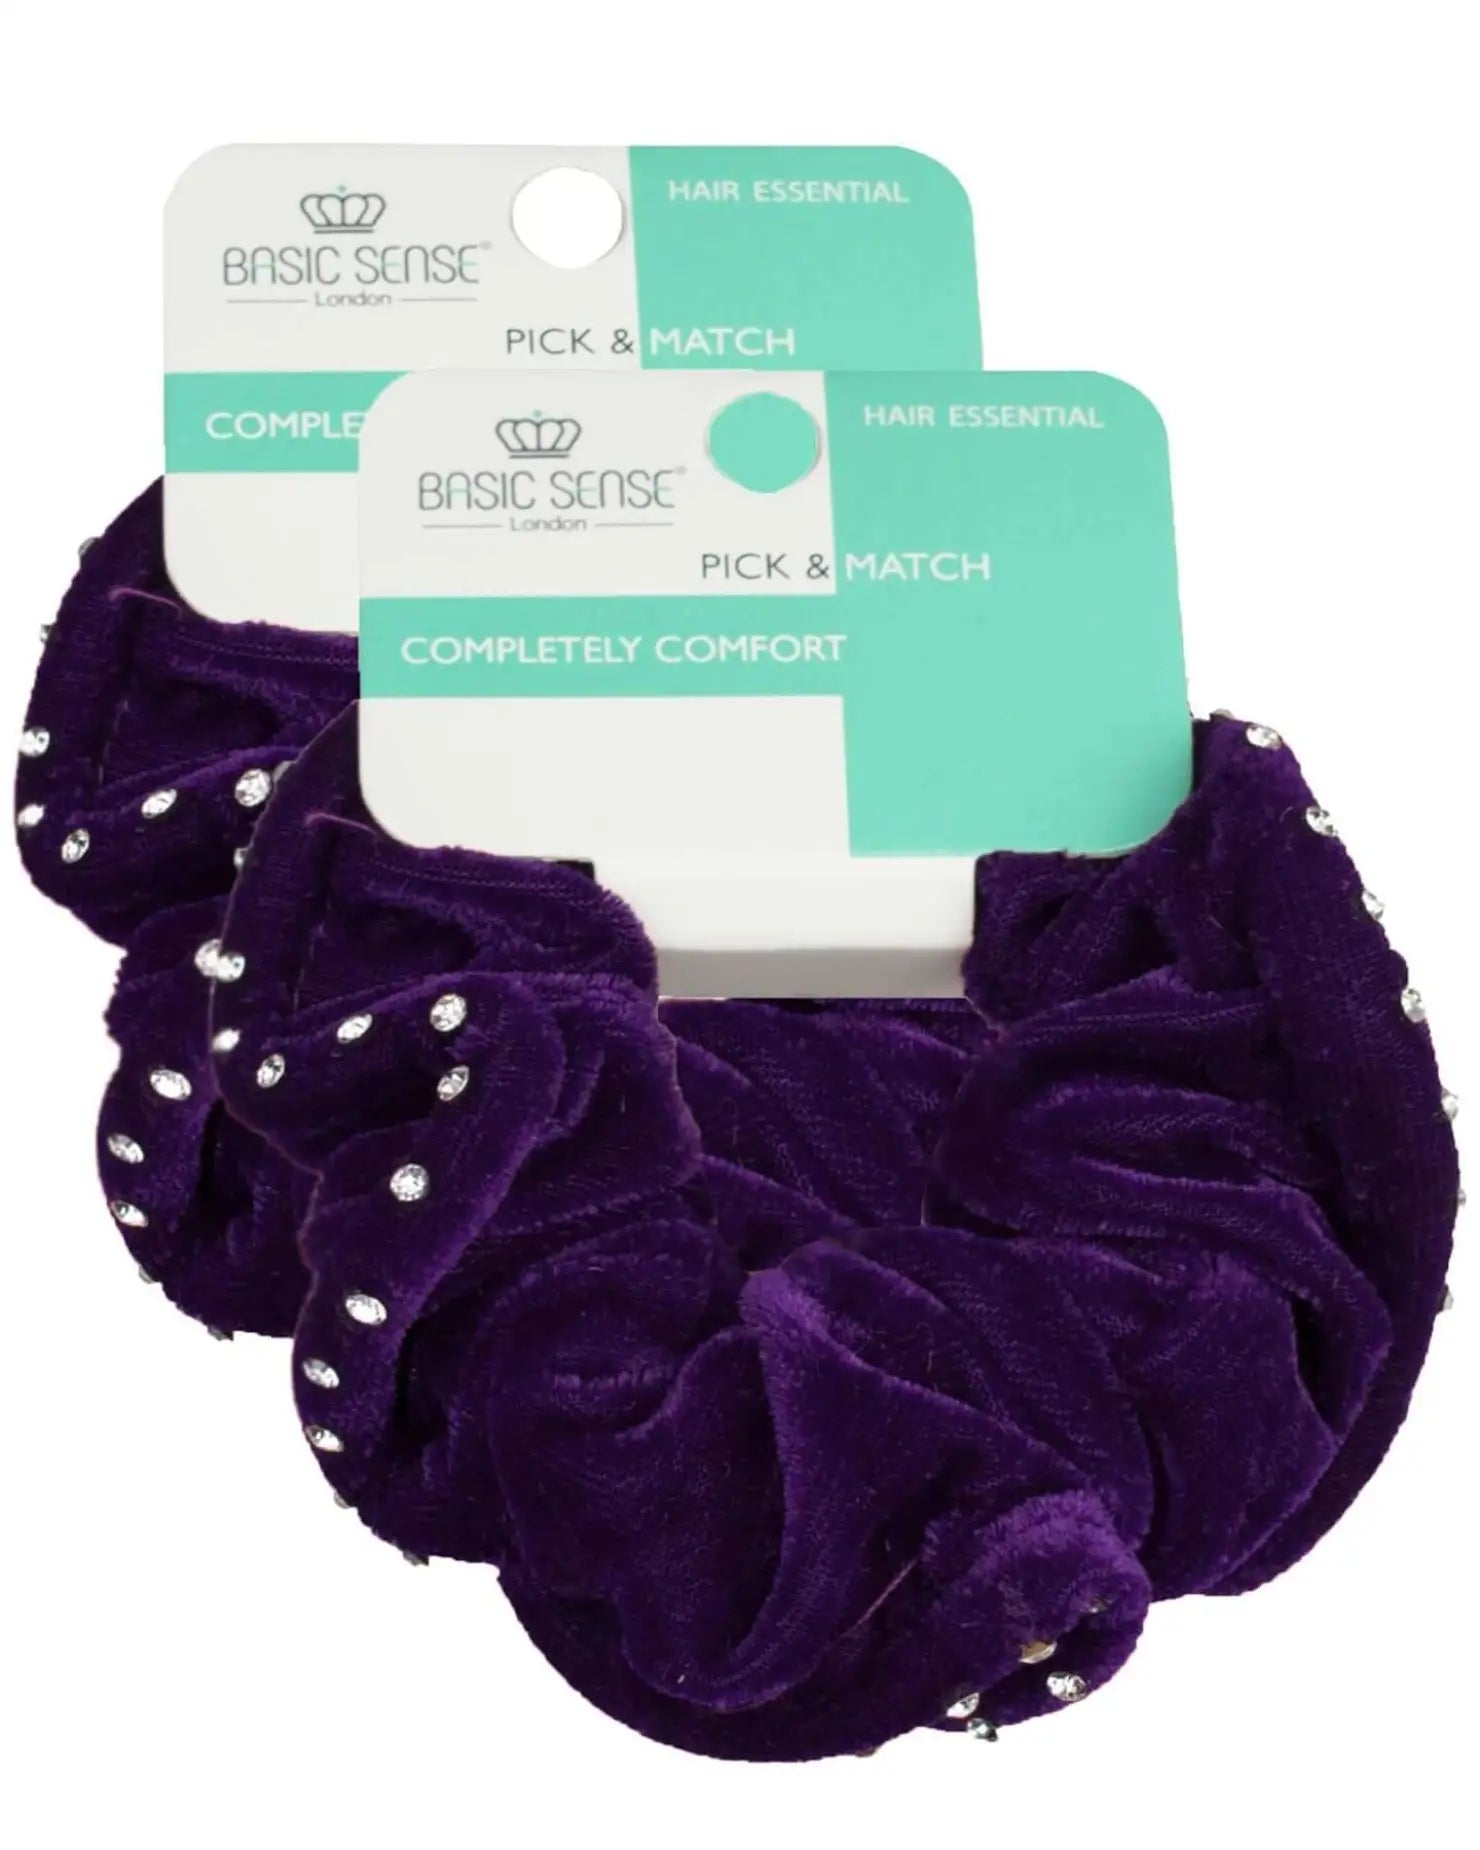 Purple rhinestone velvet hair scrunchies with white pearls